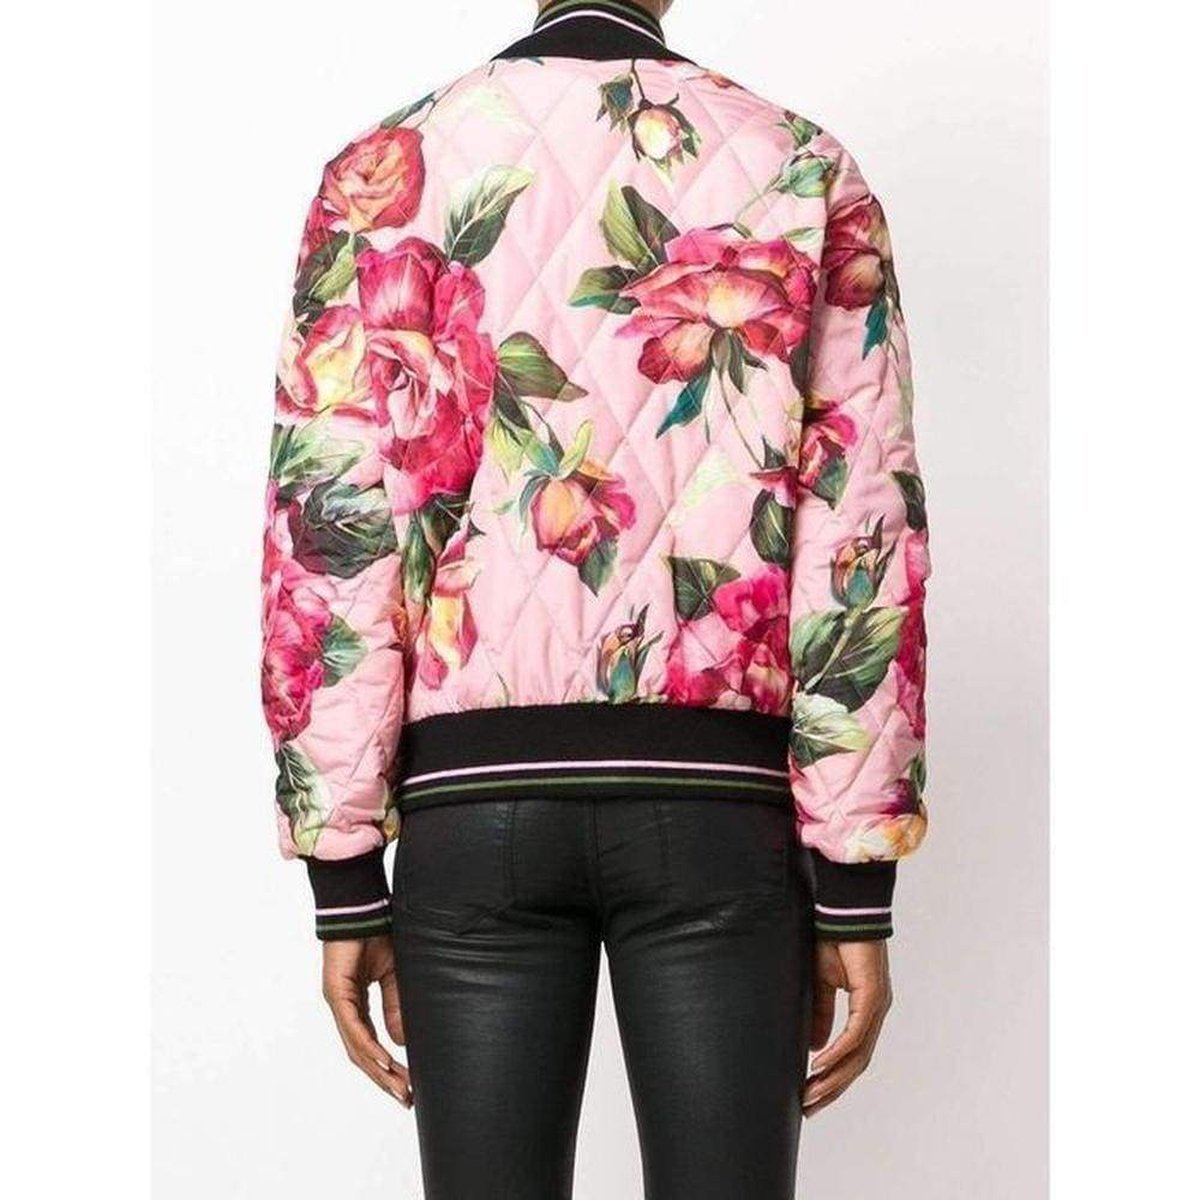 Rose Print Bomber Jacket